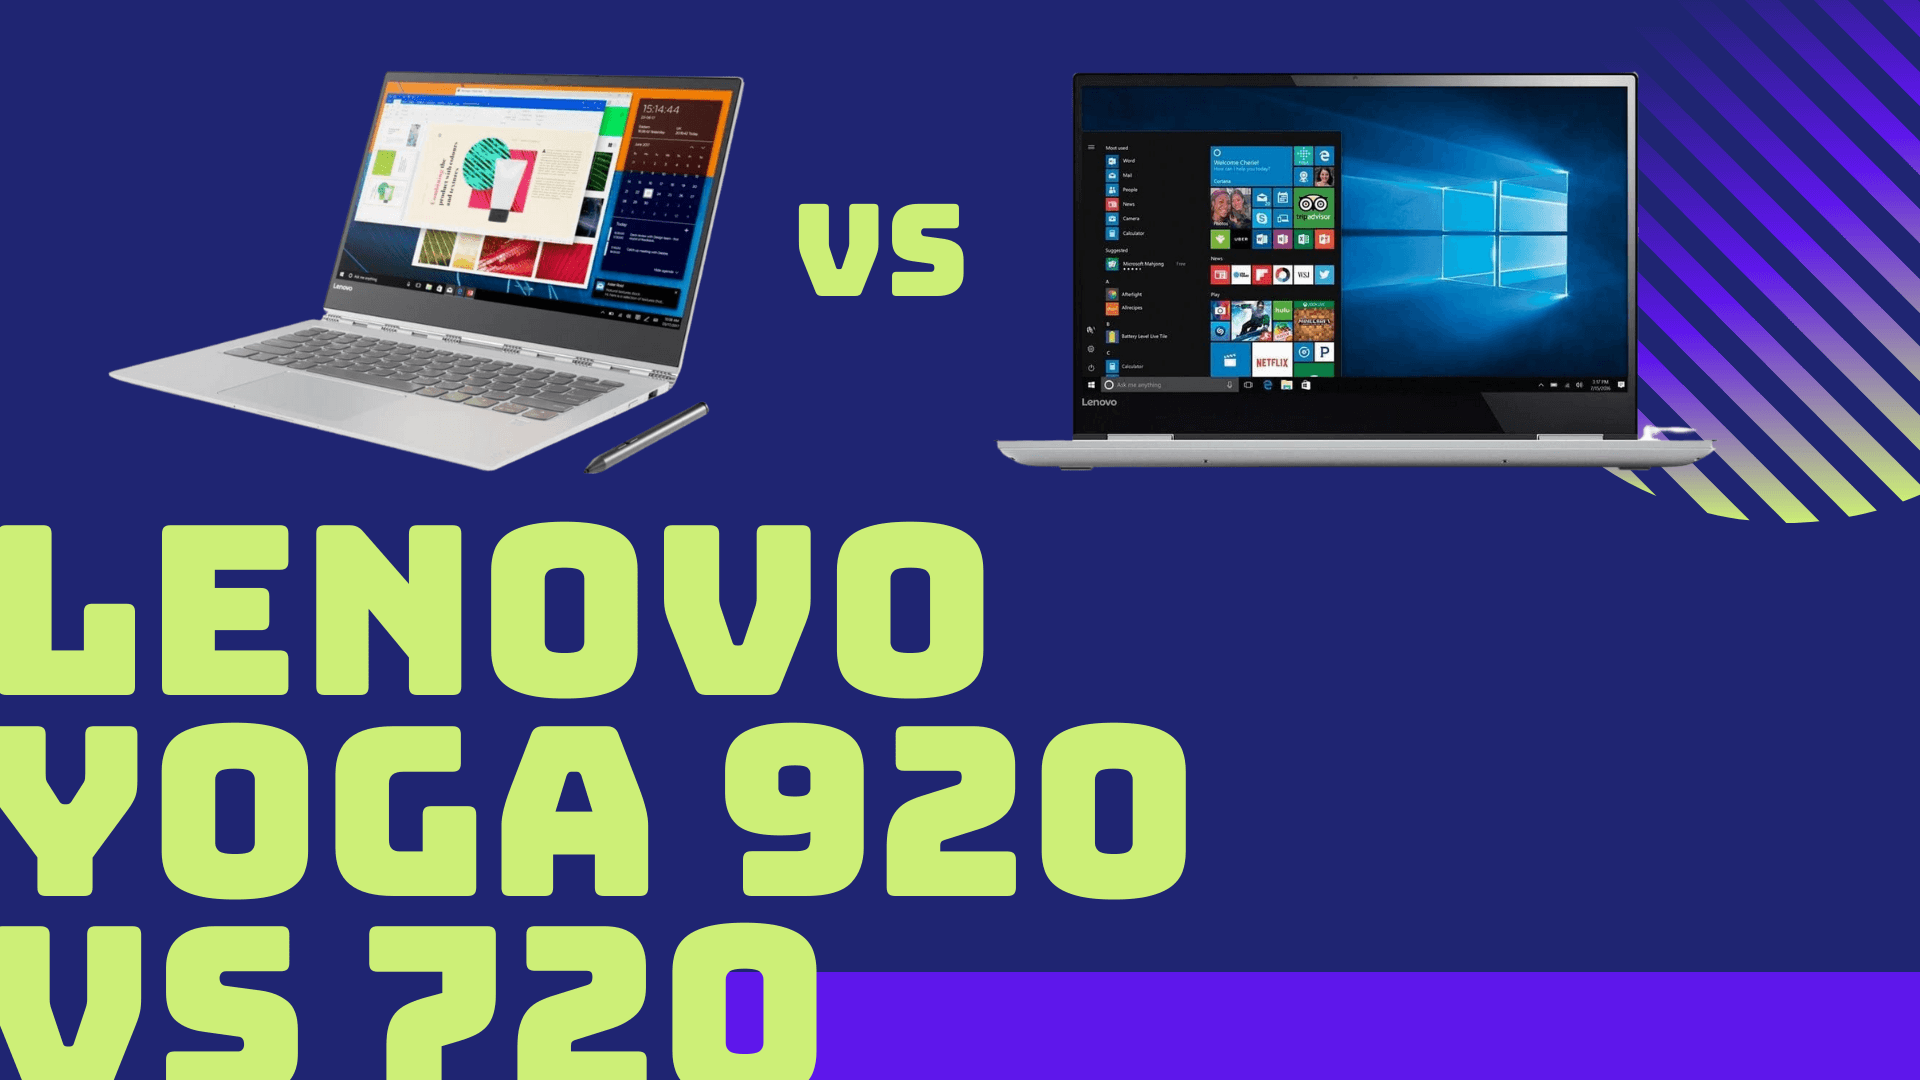 Lenovo Yoga 920 vs Yoga 720